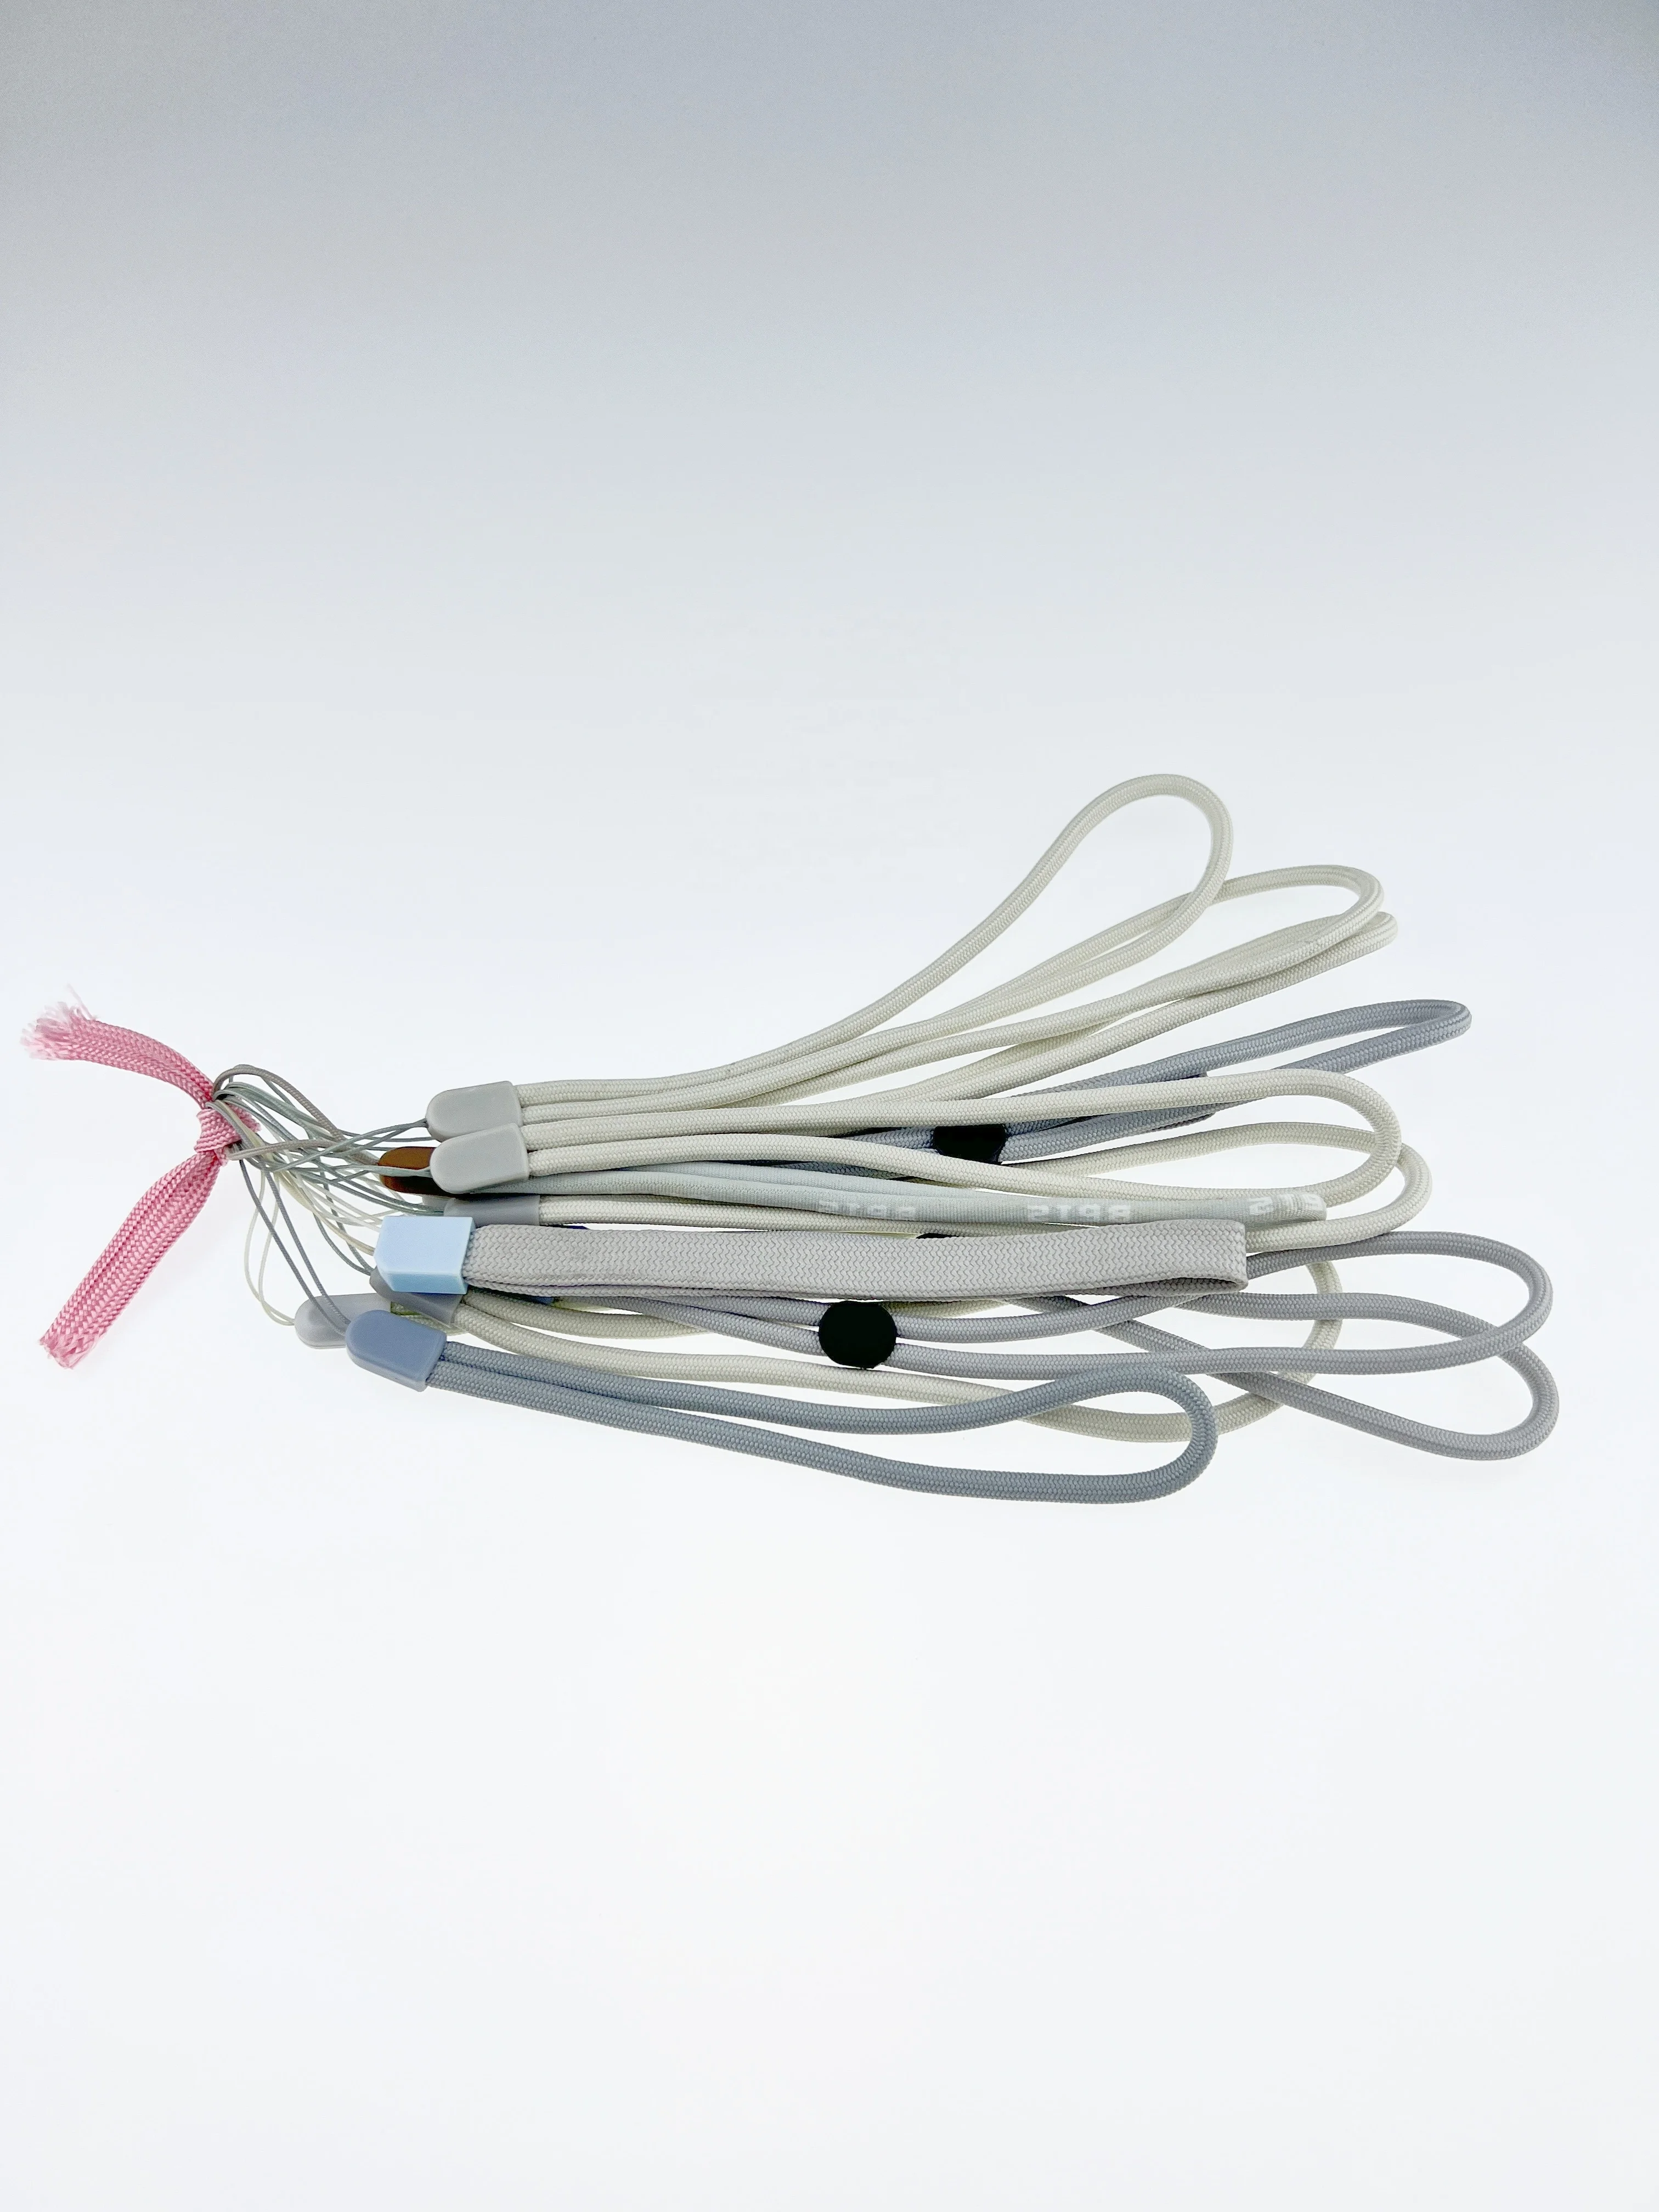 2022 customized nylon tubular rope short cord wrist strap lanyard string for car key water bottle card holder phone case